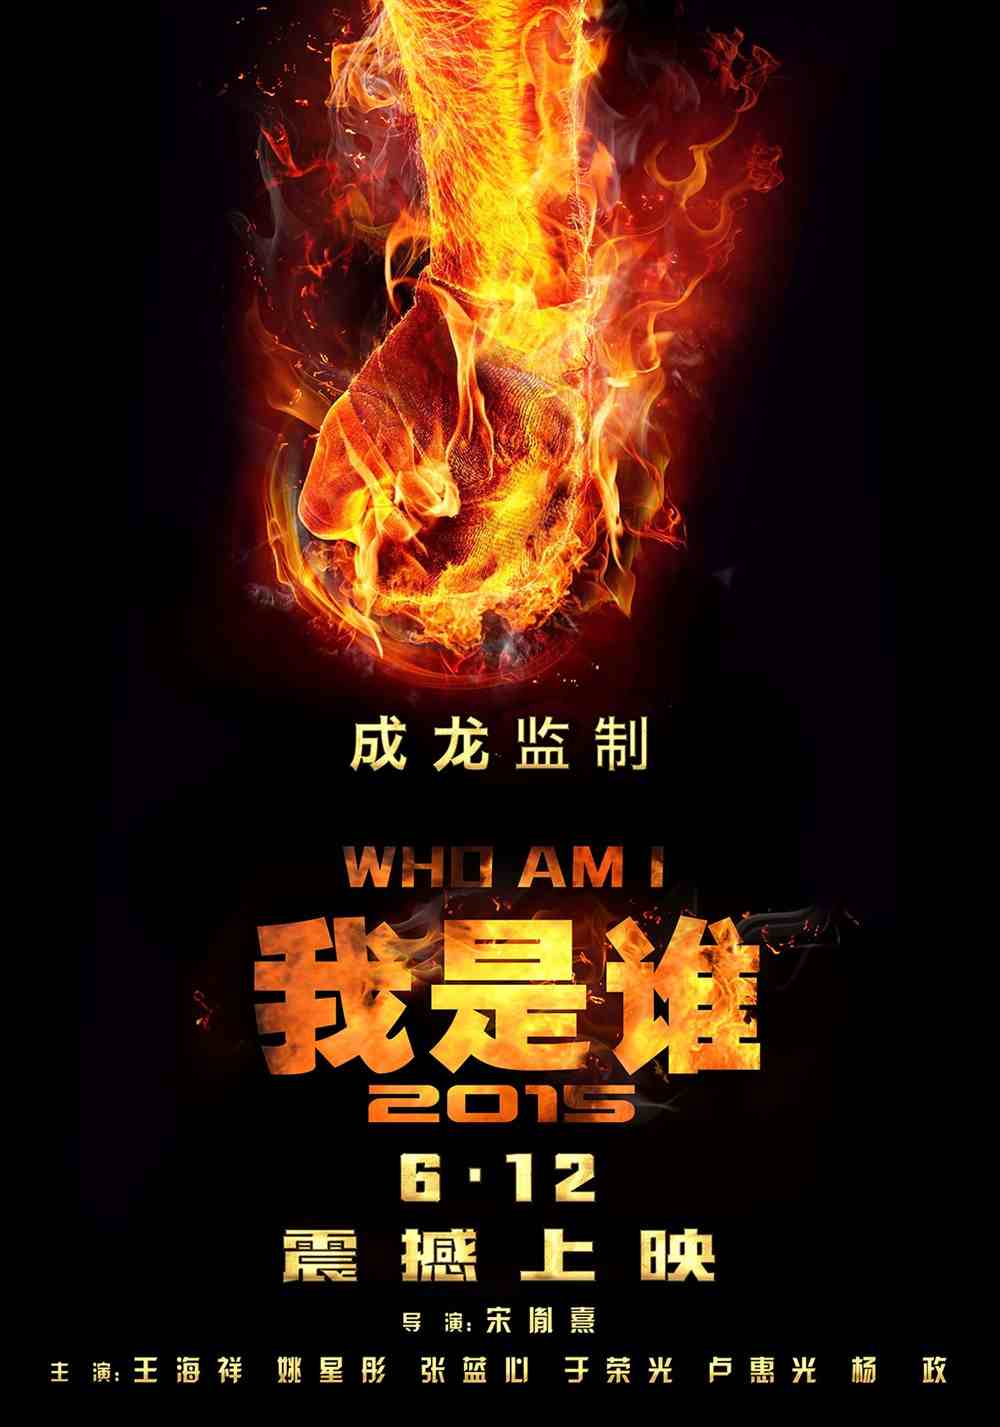 Джеки Чан  работает над ремейком "Кто я?" 3